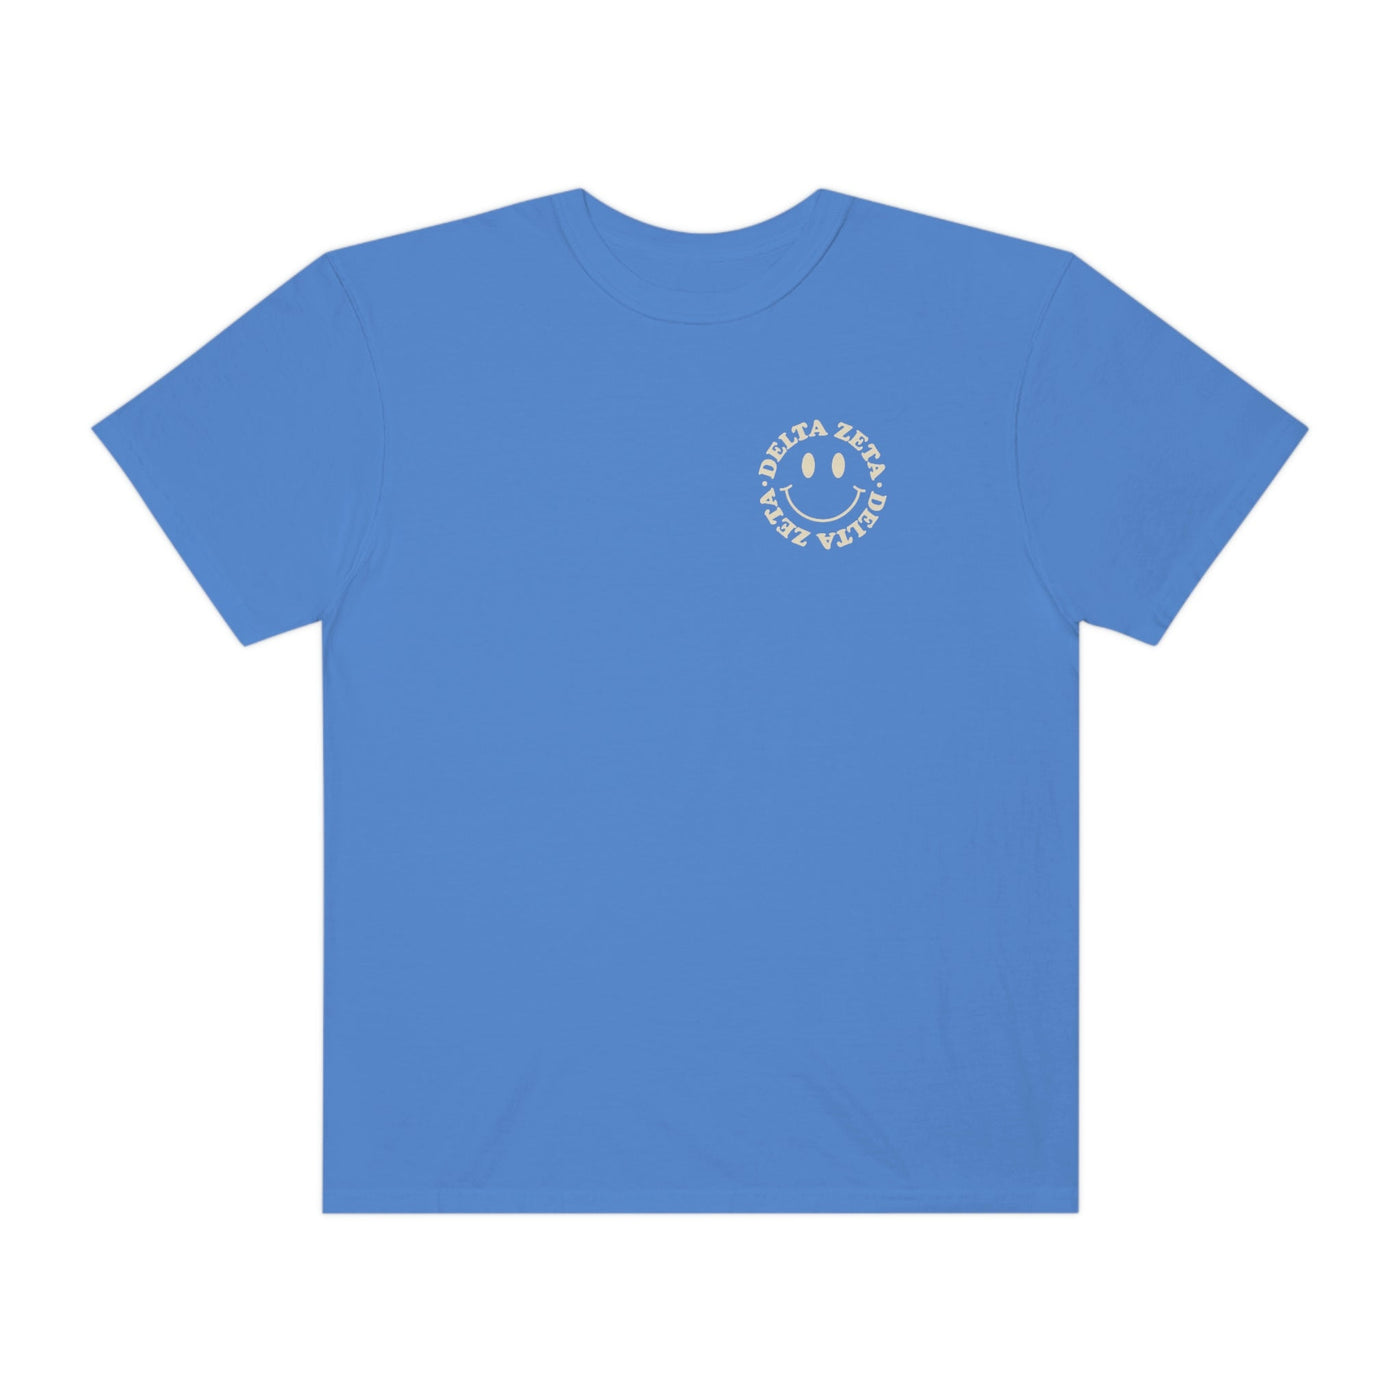 Delta Zeta Smile Sorority Comfy T-Shirt